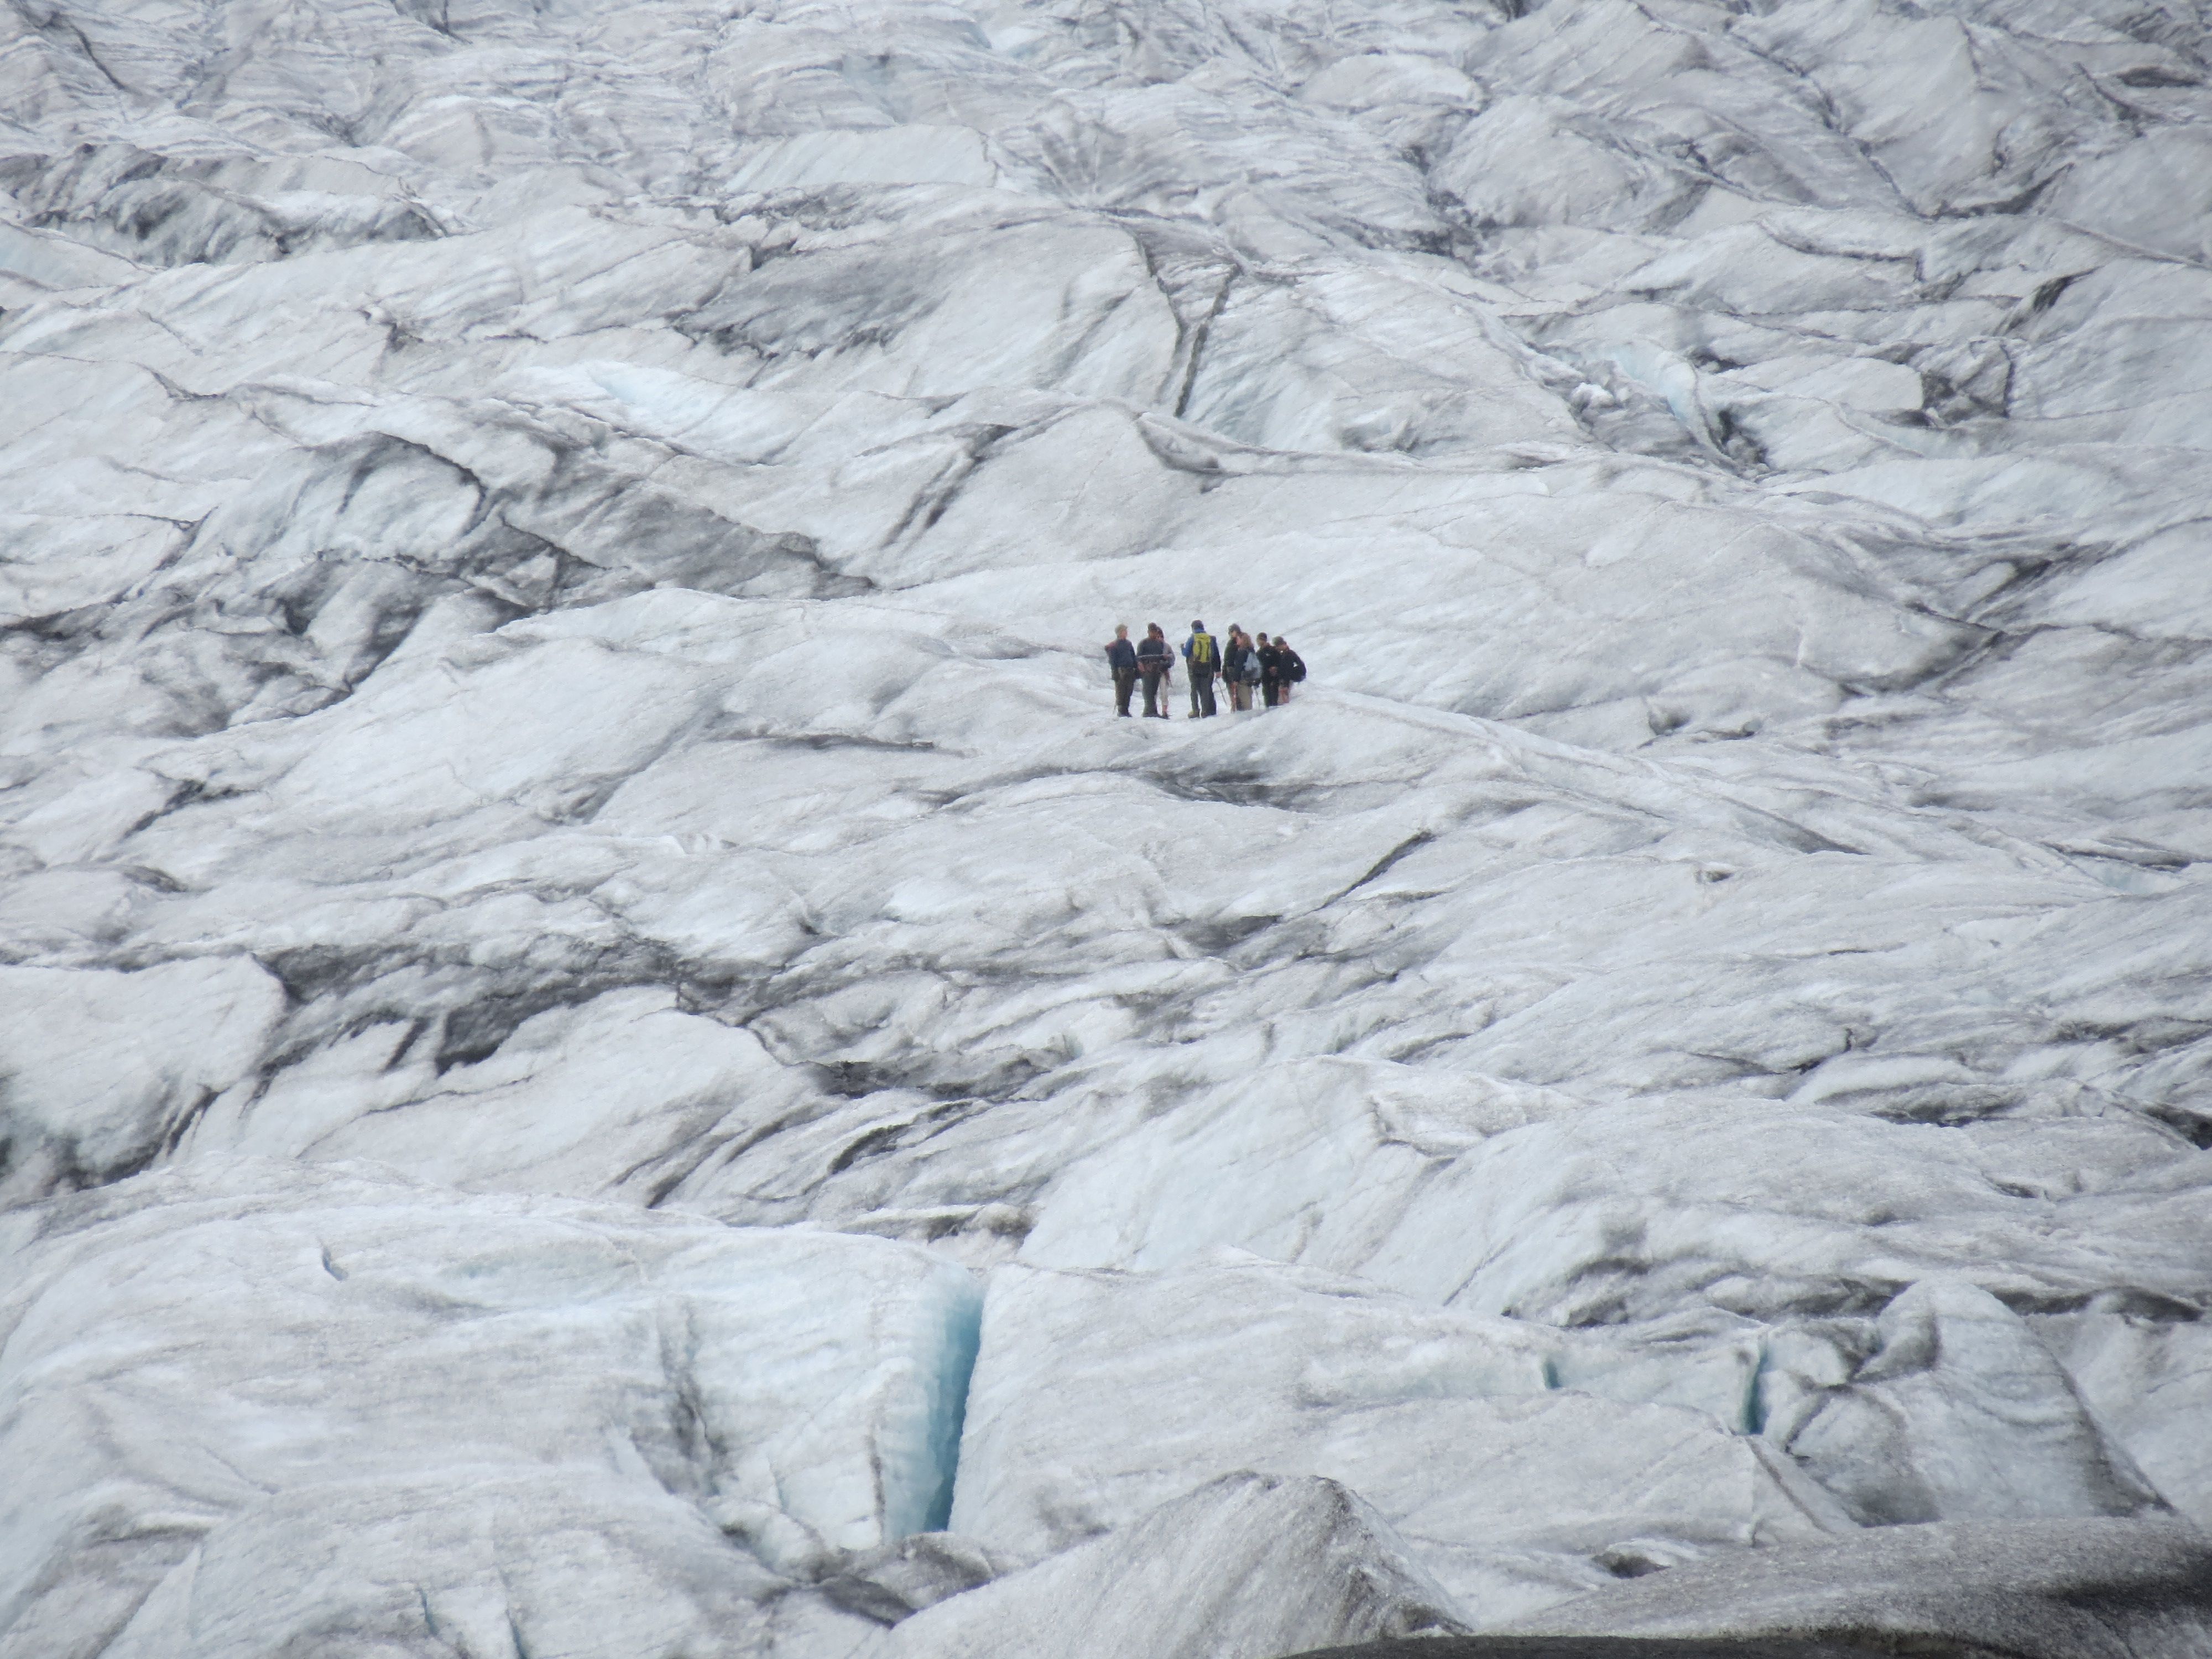 Glacial hikers